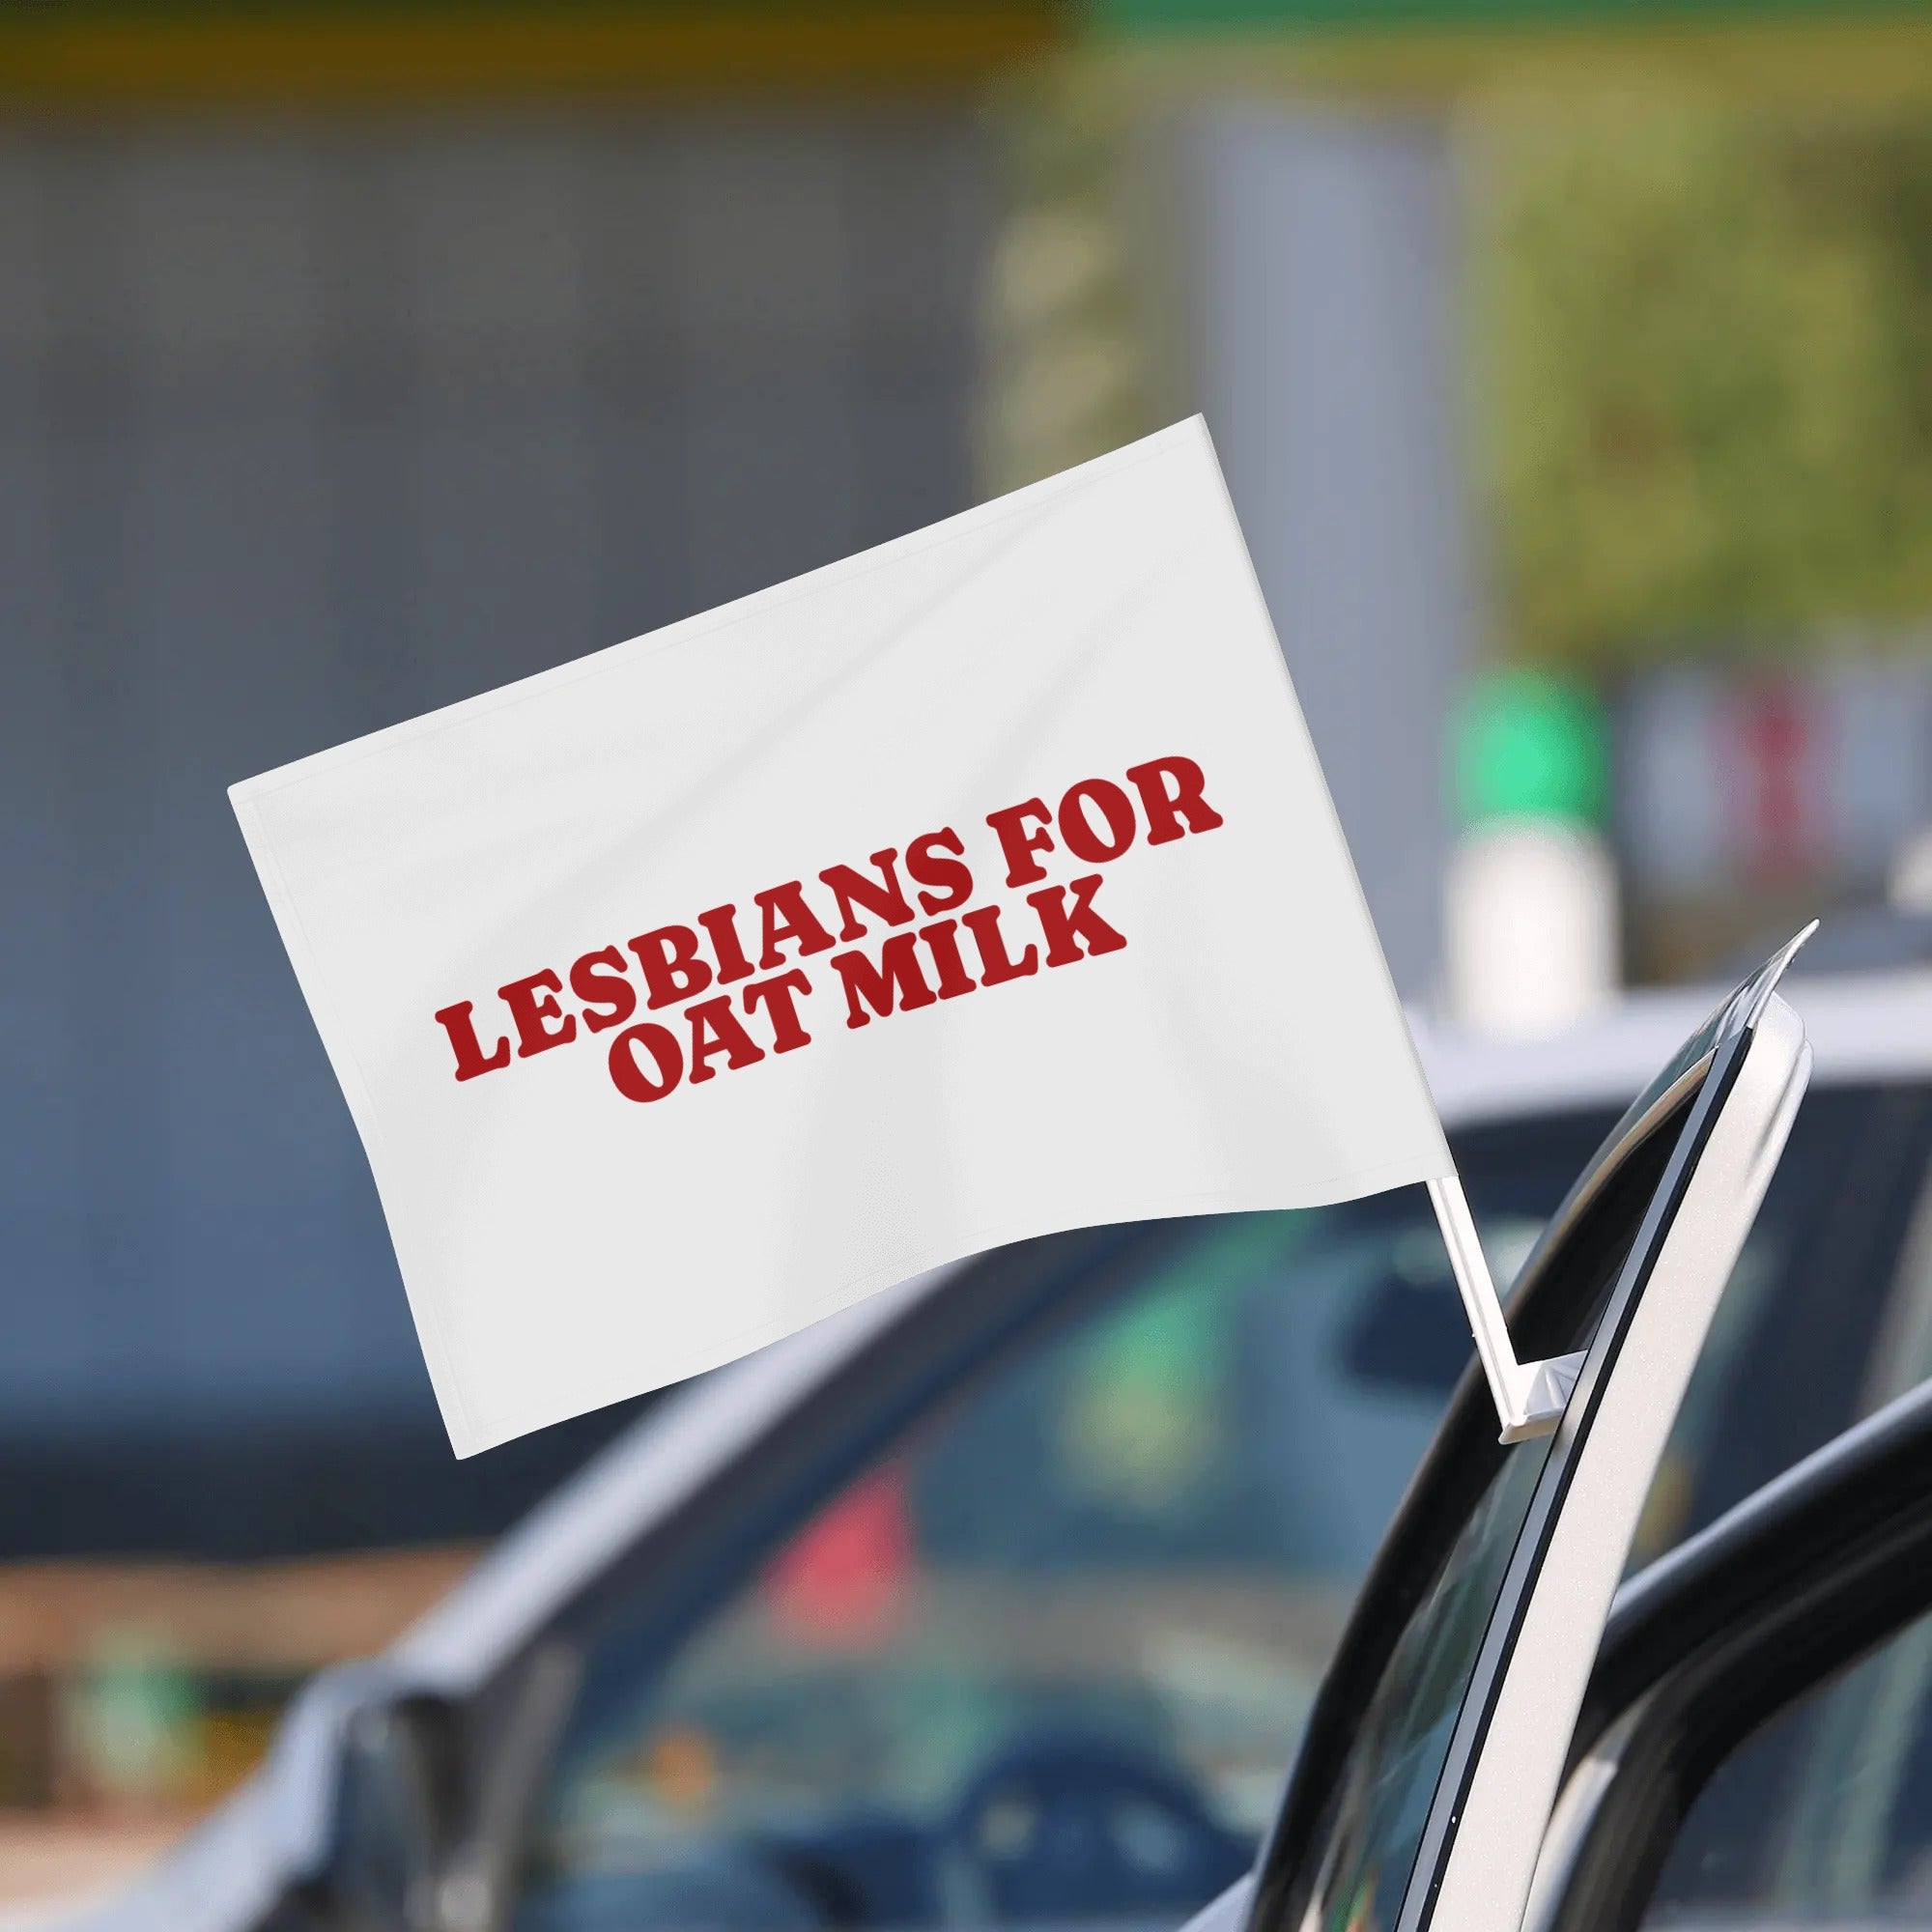 Lesbians For Oat Milk Car Flag 12 x 18